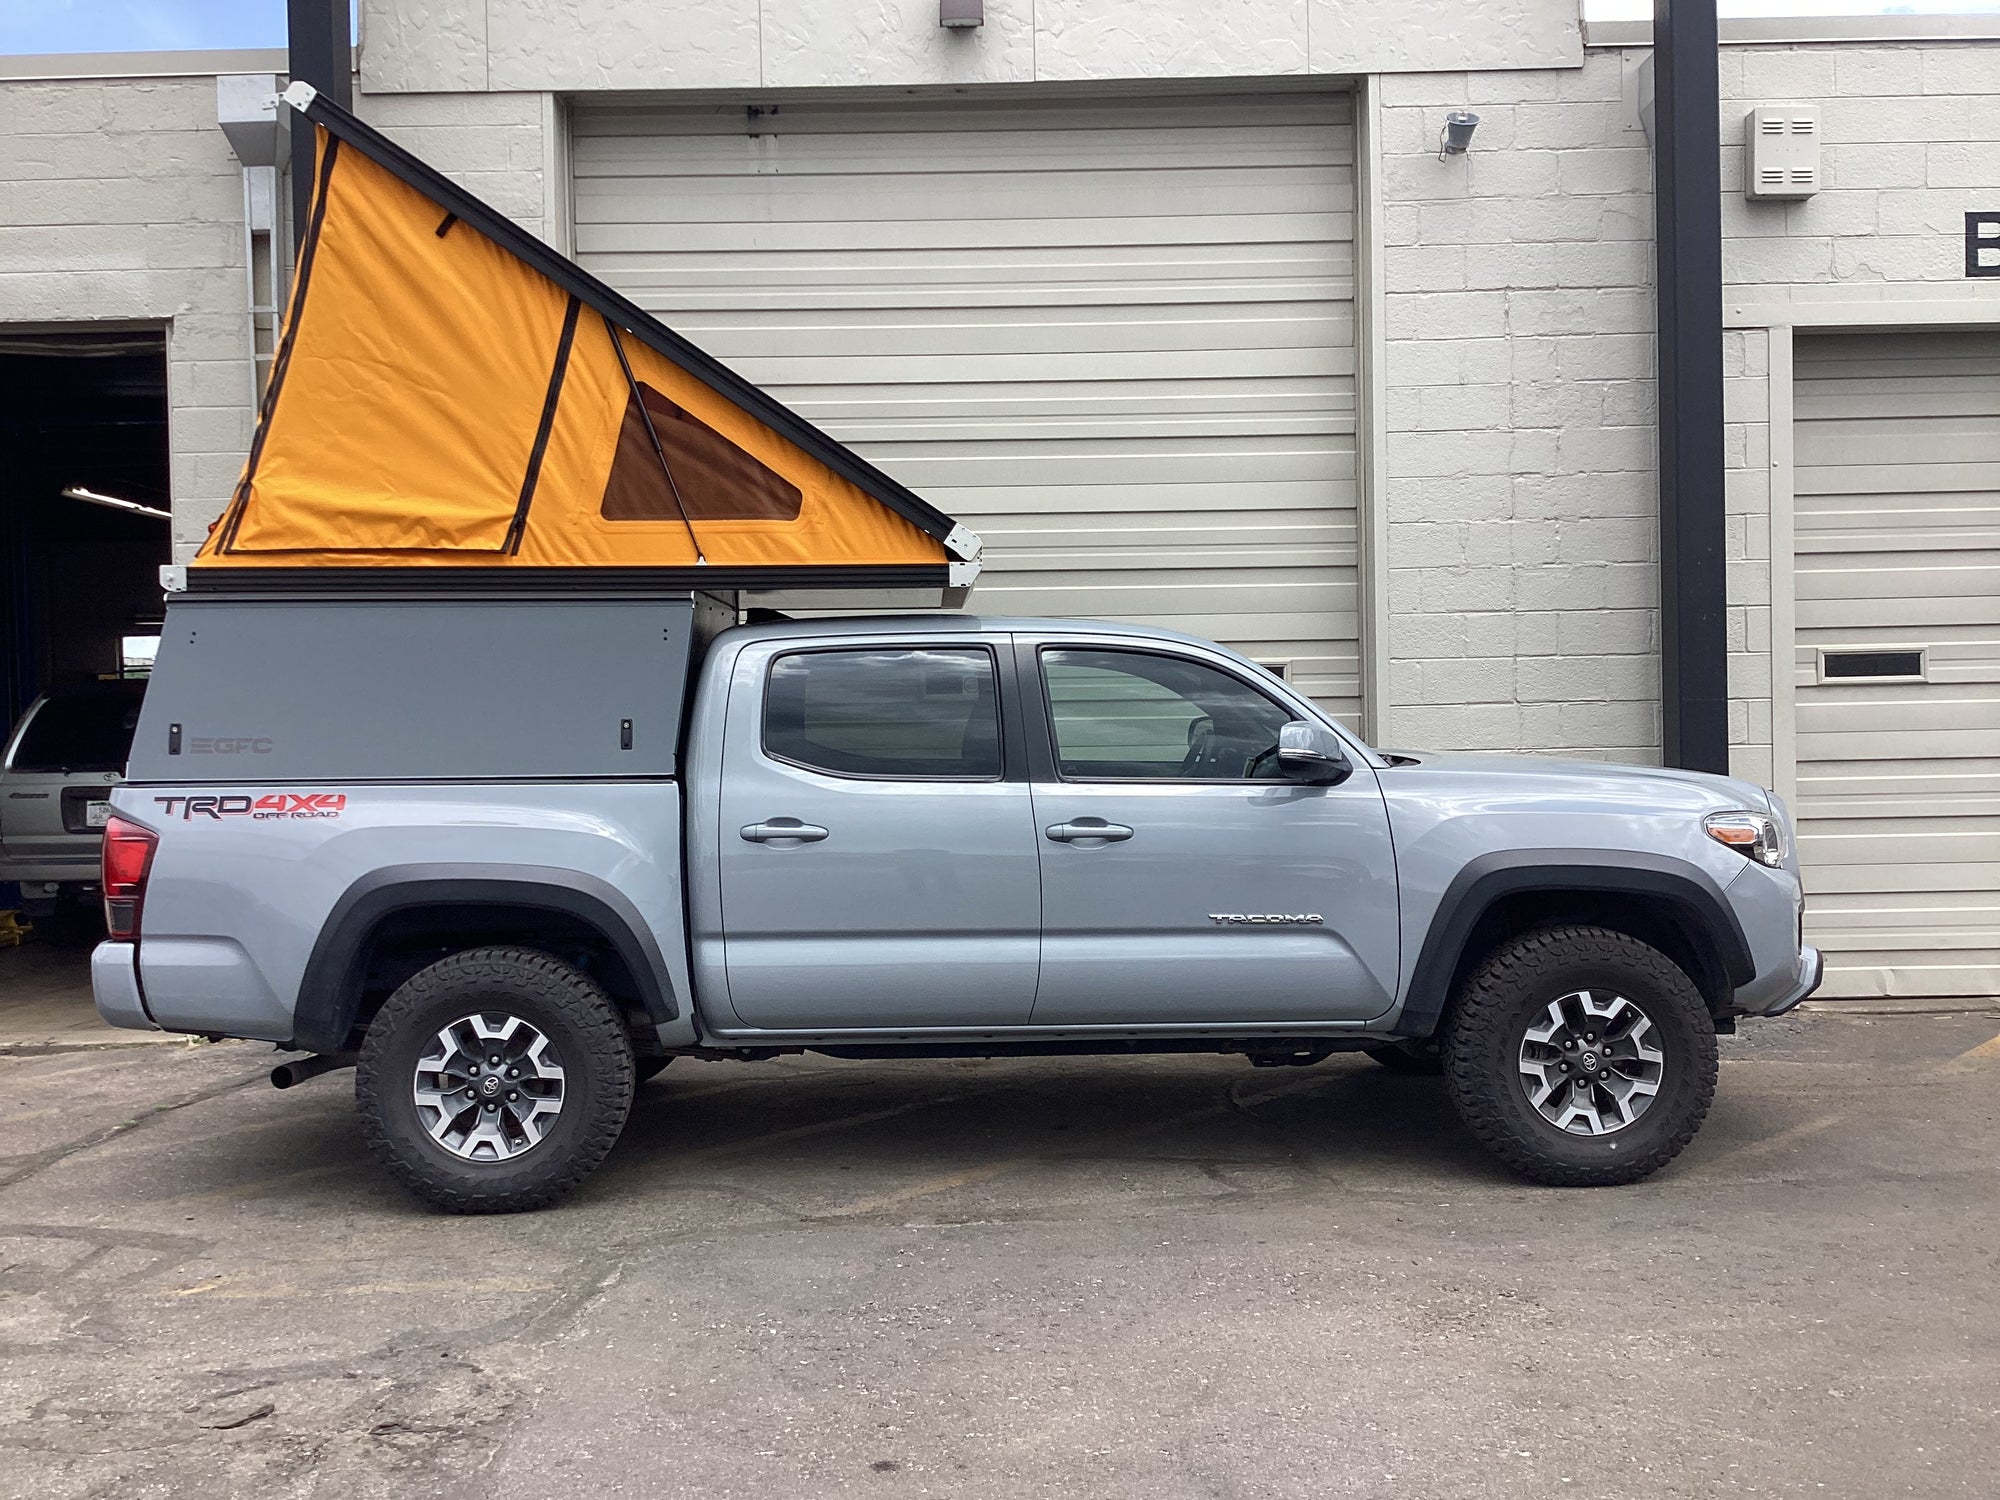 2019 Toyota Tacoma Camper - Build #5226